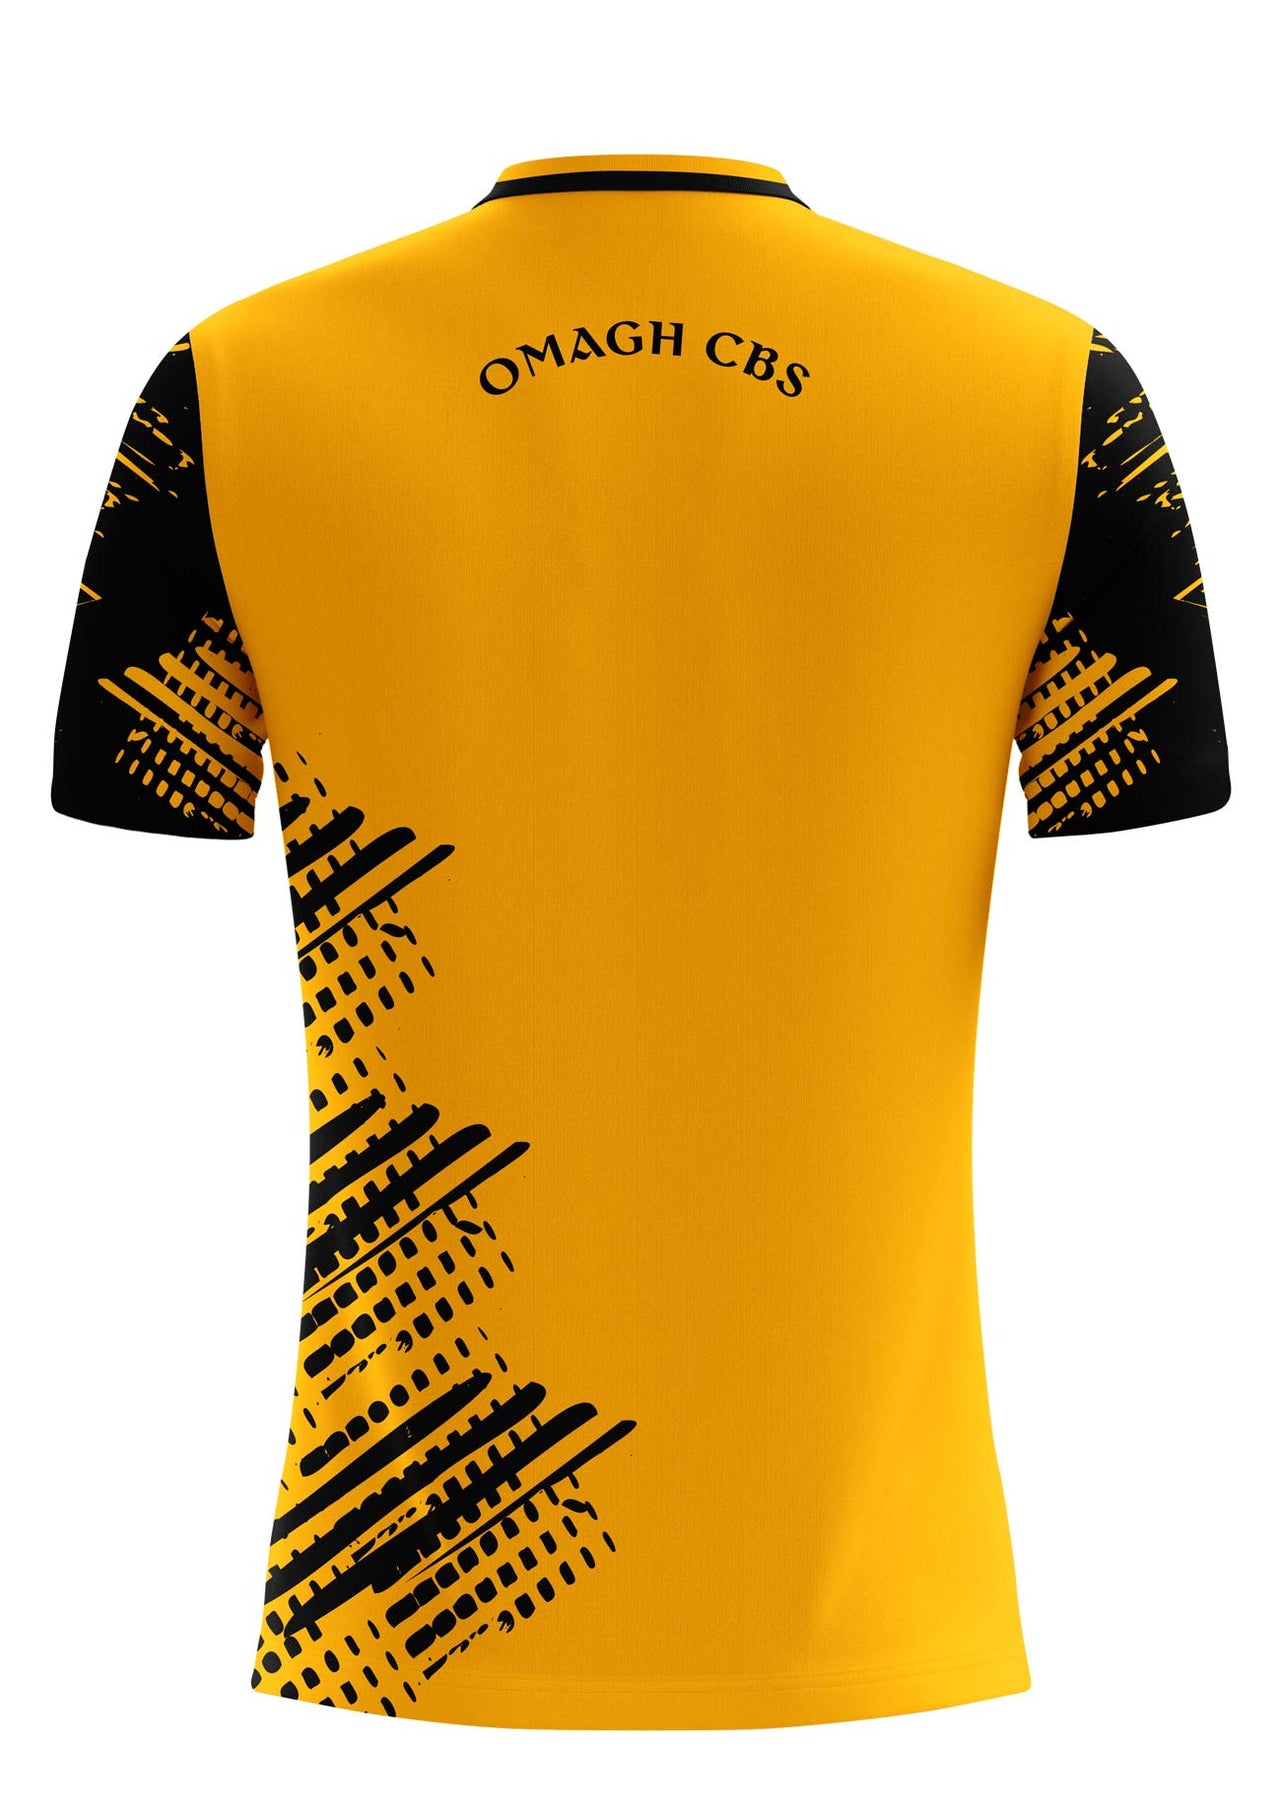 Omagh CBS Goalkeeper Jersey Regular Fit Adult